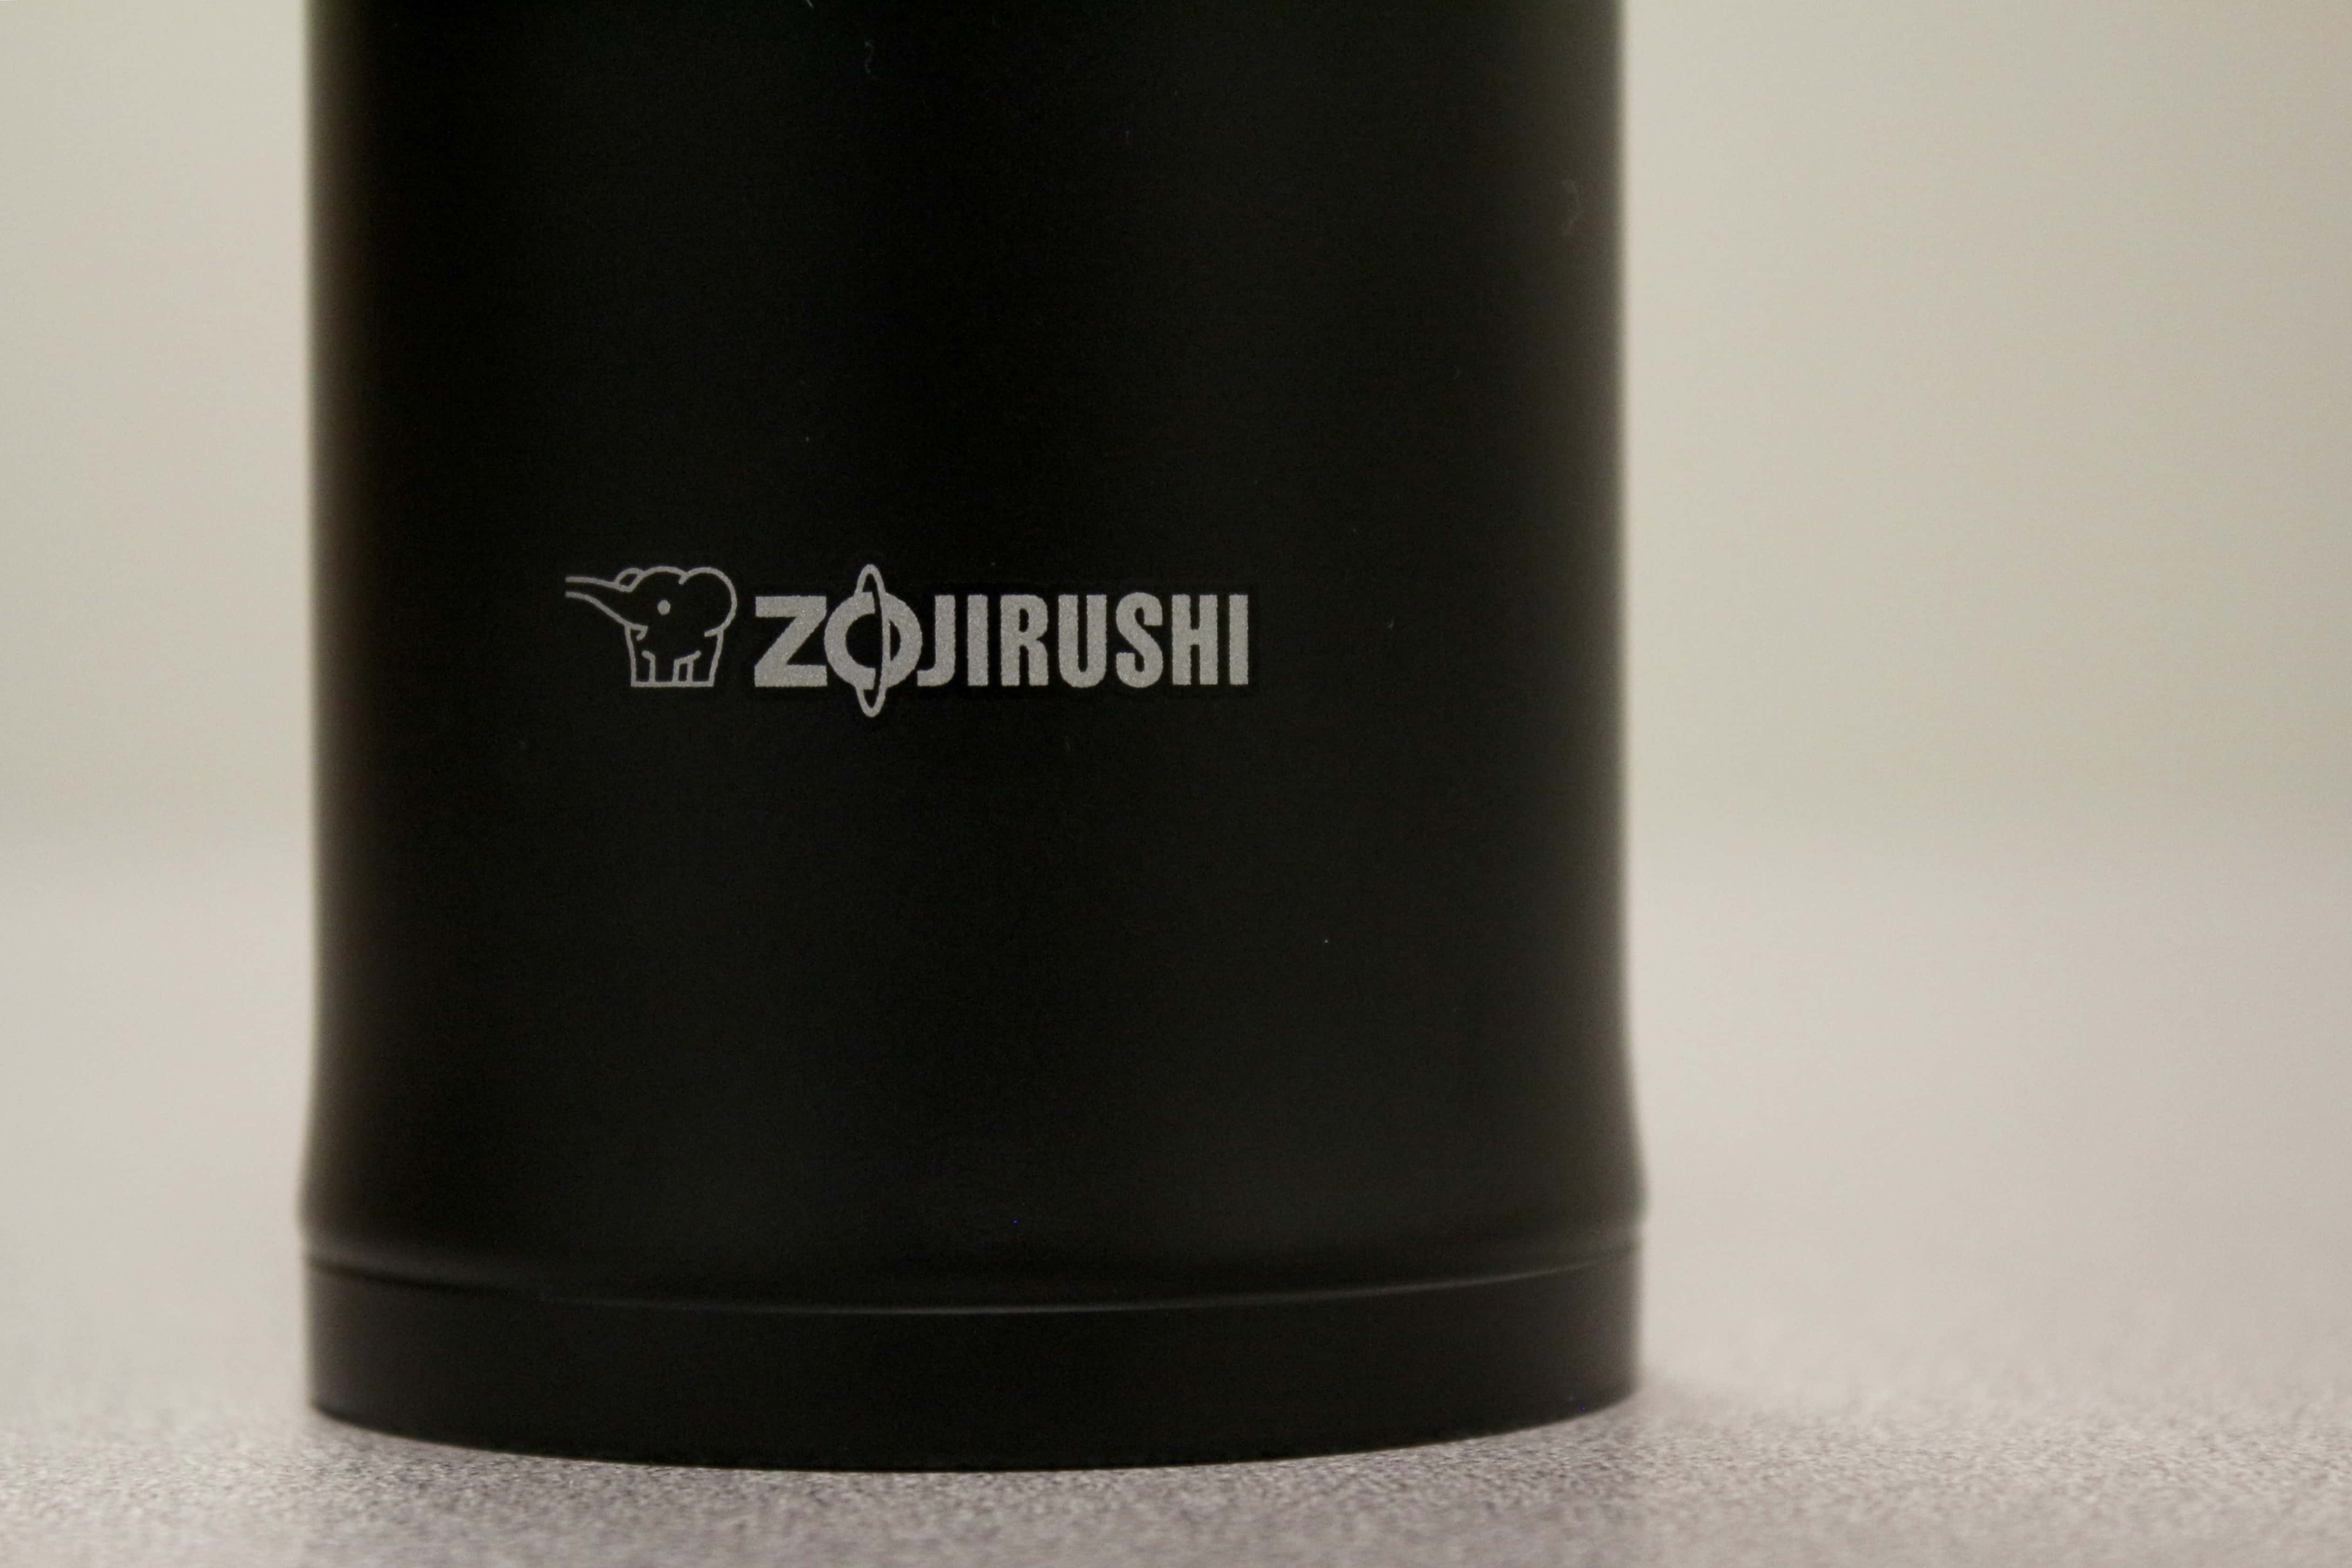 Zojirushi Logo - A Review of the Zojirushi Stainless Steel Mug